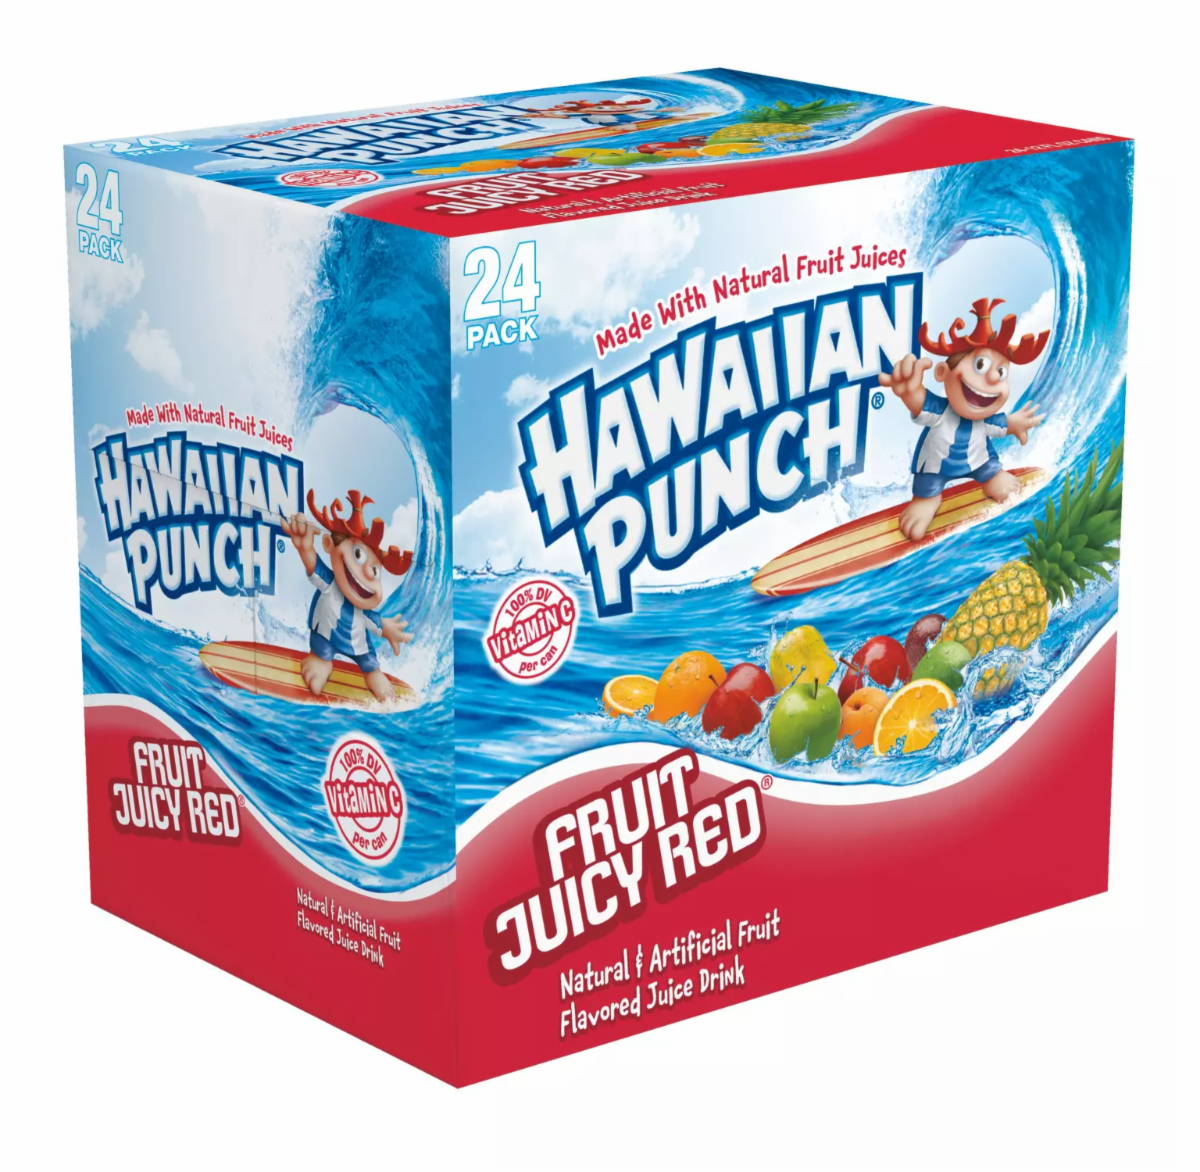 40350 - Hawaiian Punch Fruit Juicy Red 12oz/24Pk USD